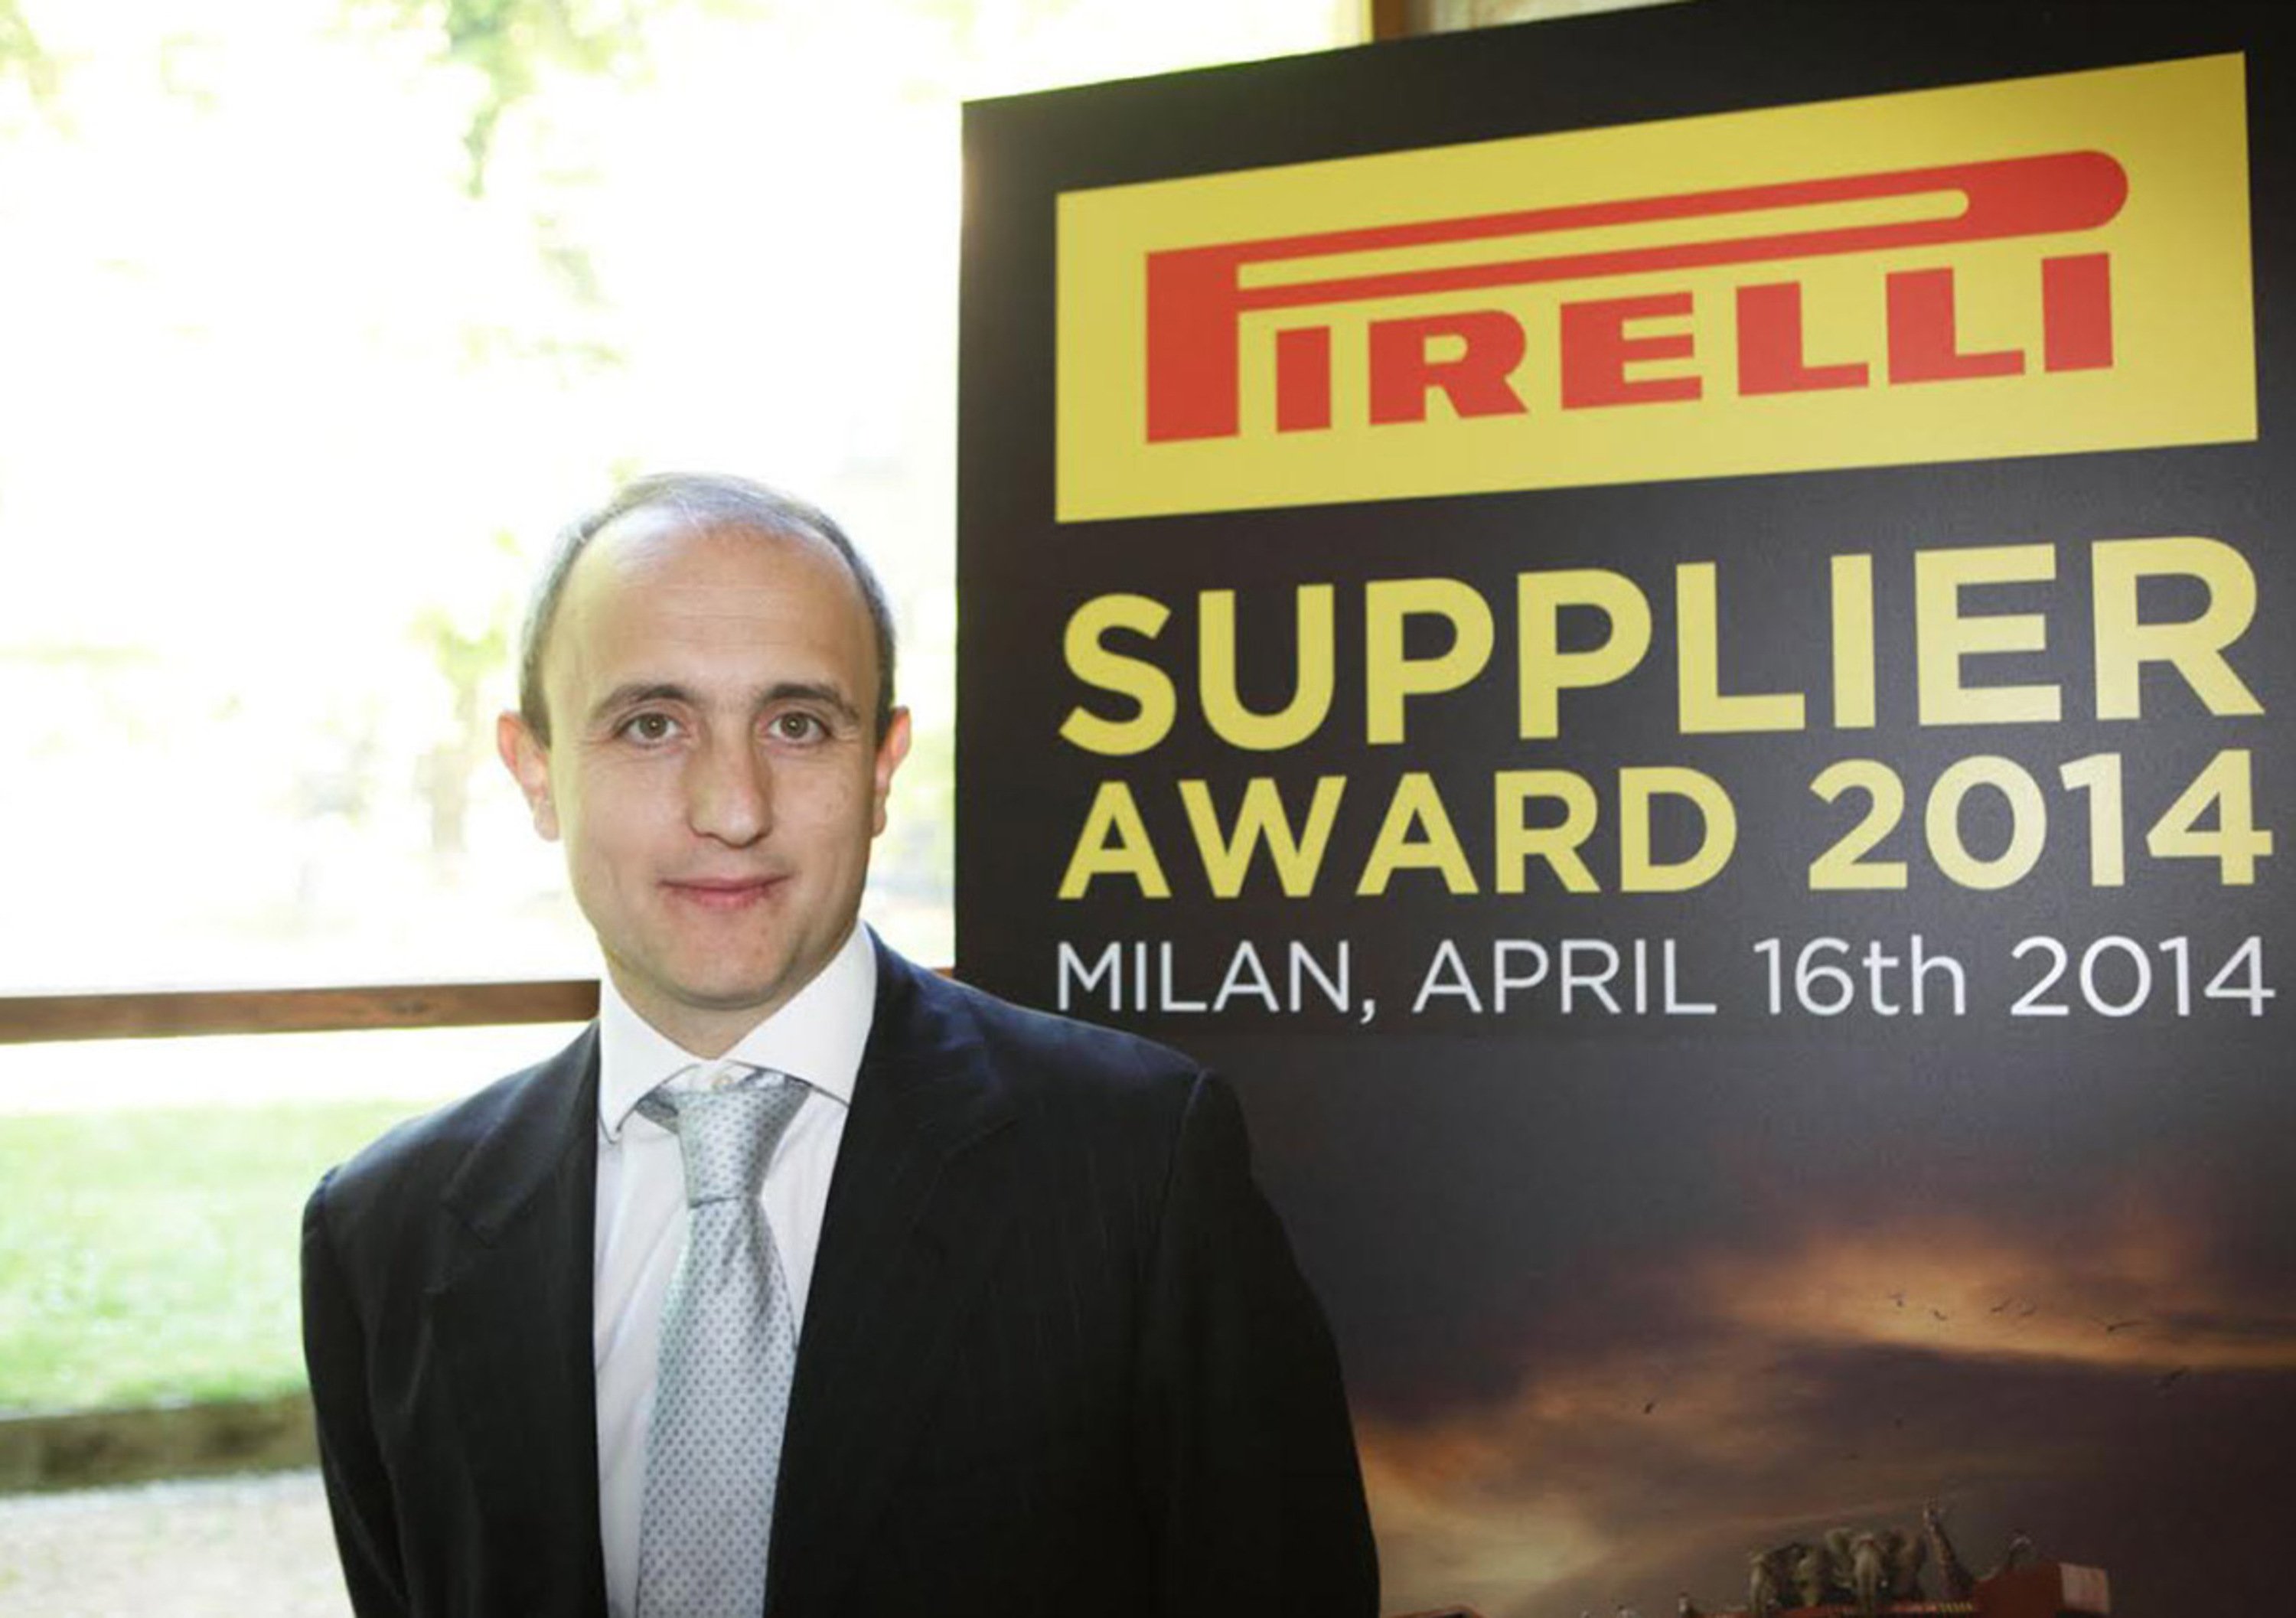 Pirelli Supplier Award 2014